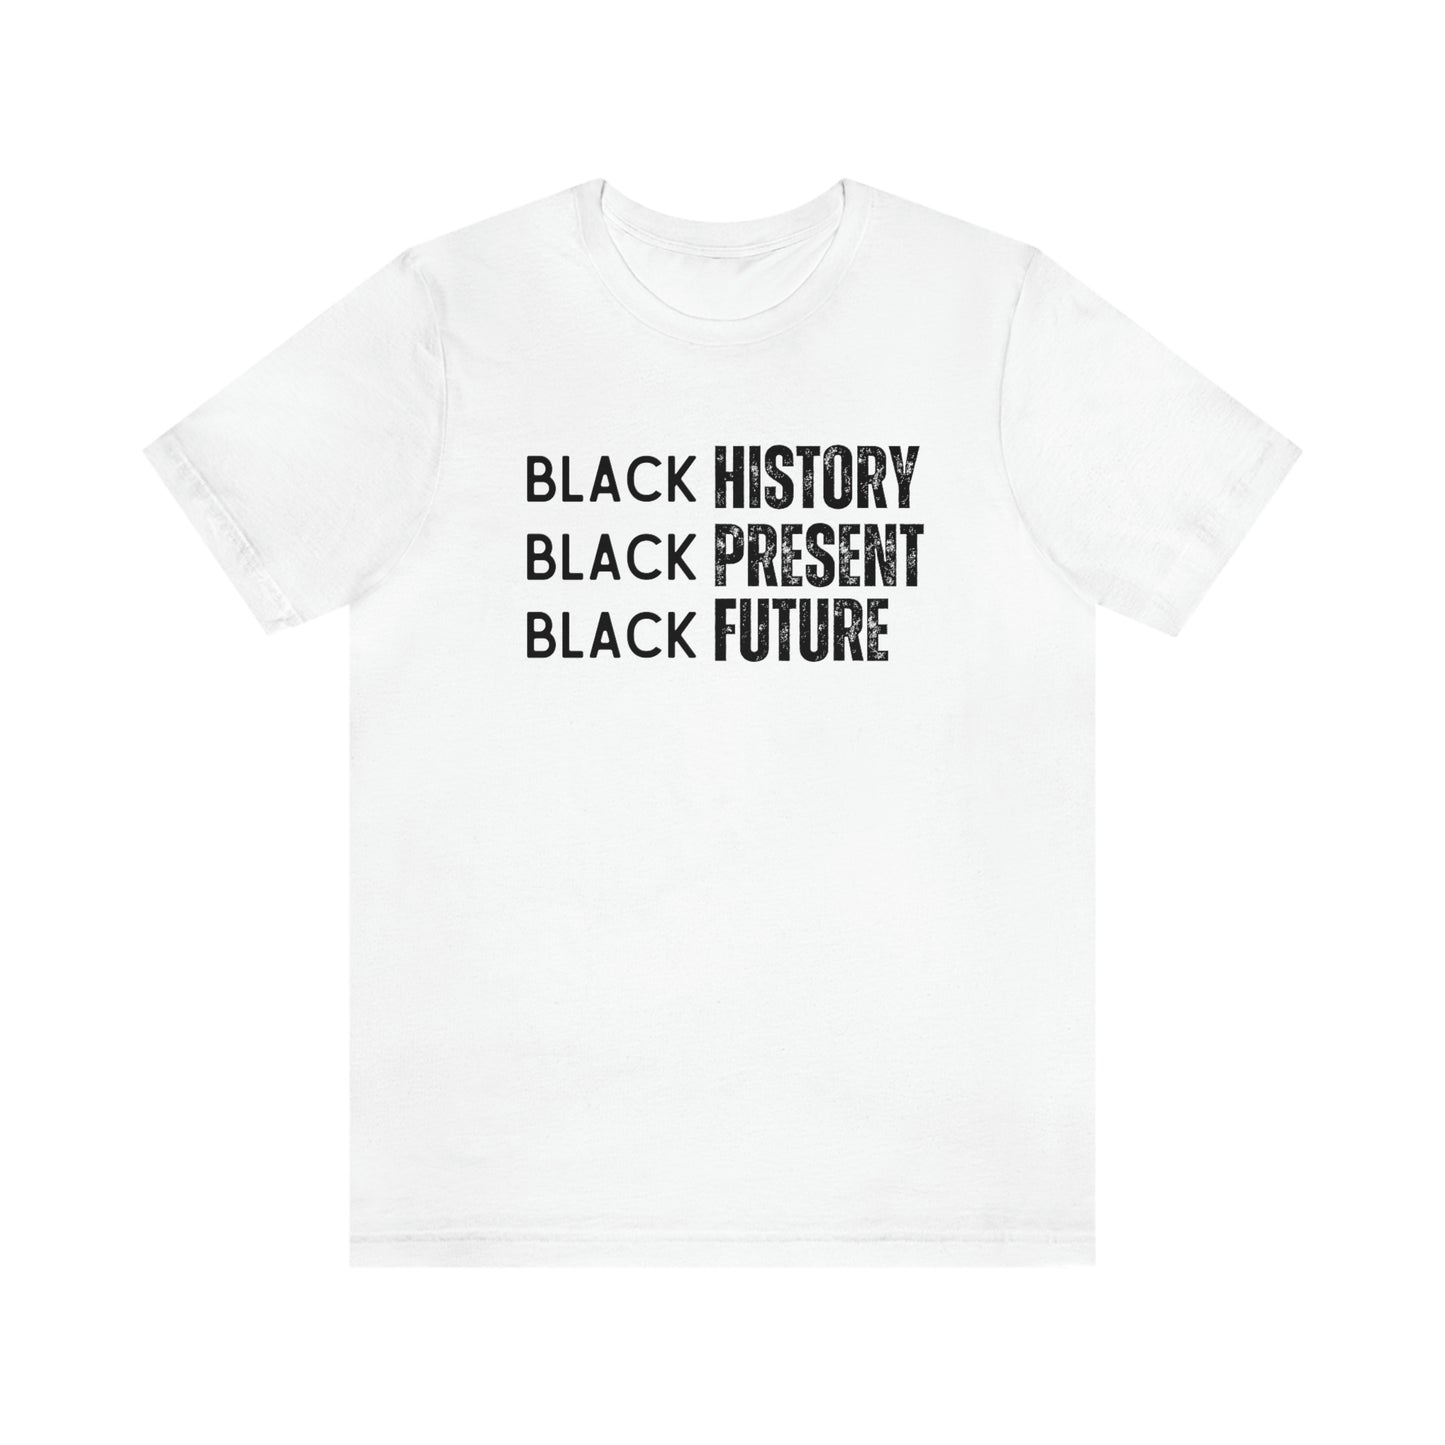 Black History Month Shirt, Black Future, Black Culture Shirt, Black Excellence, Juneteenth, Black Pride, Freedom Shirts